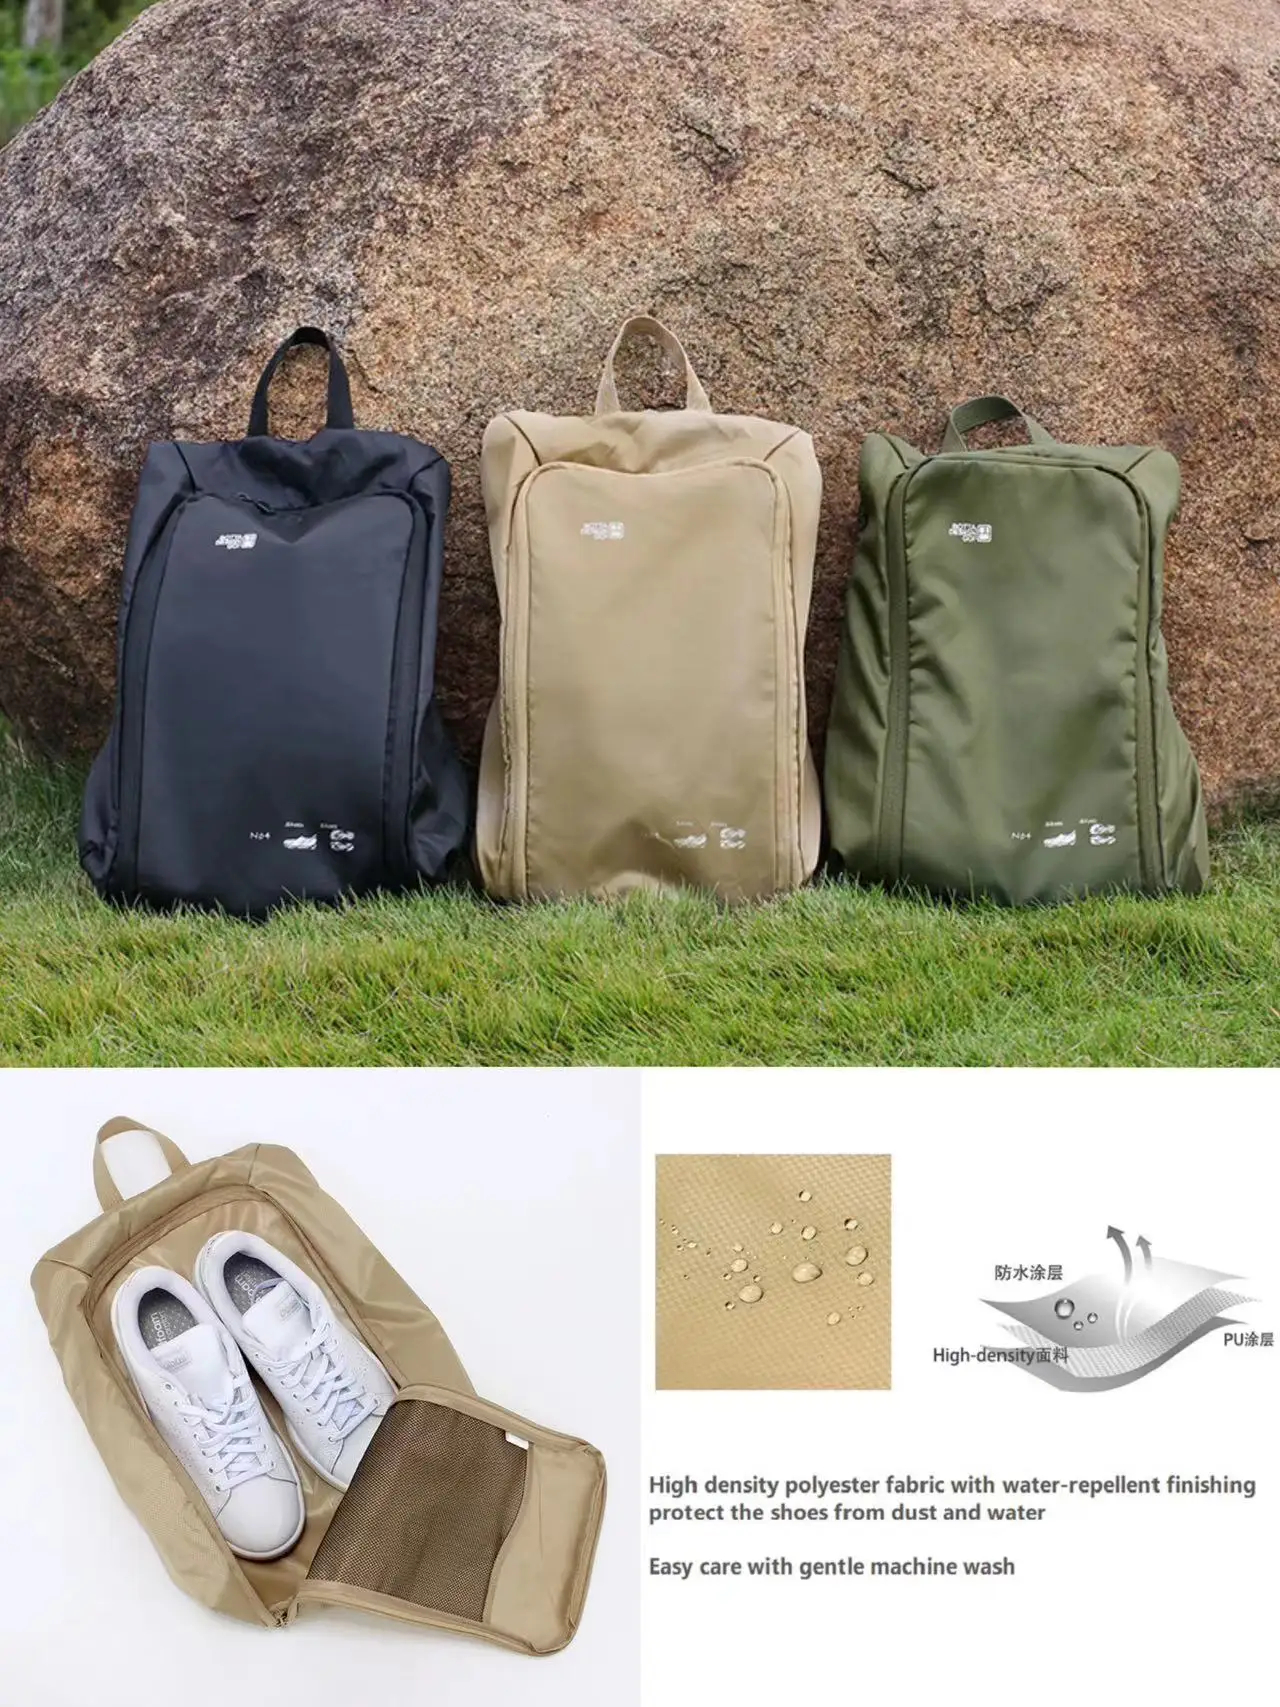 

Lightweight Water-repellent Shoe Bag with Zipper Closure and Hanger Loop Travel Outdoor Storage Portable